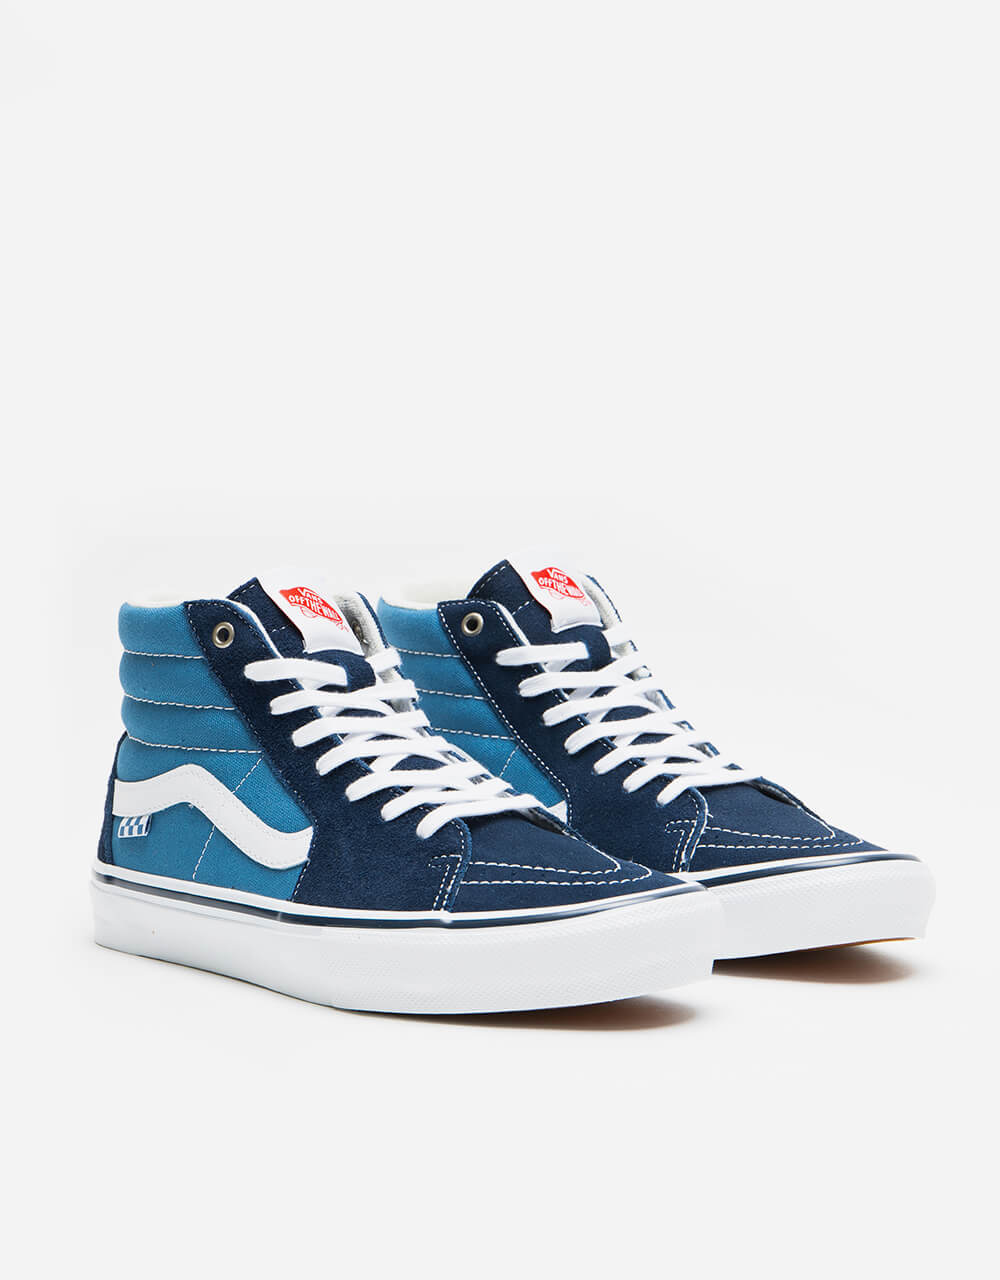 Vans Skate Sk8-Hi Shoes - Navy/White